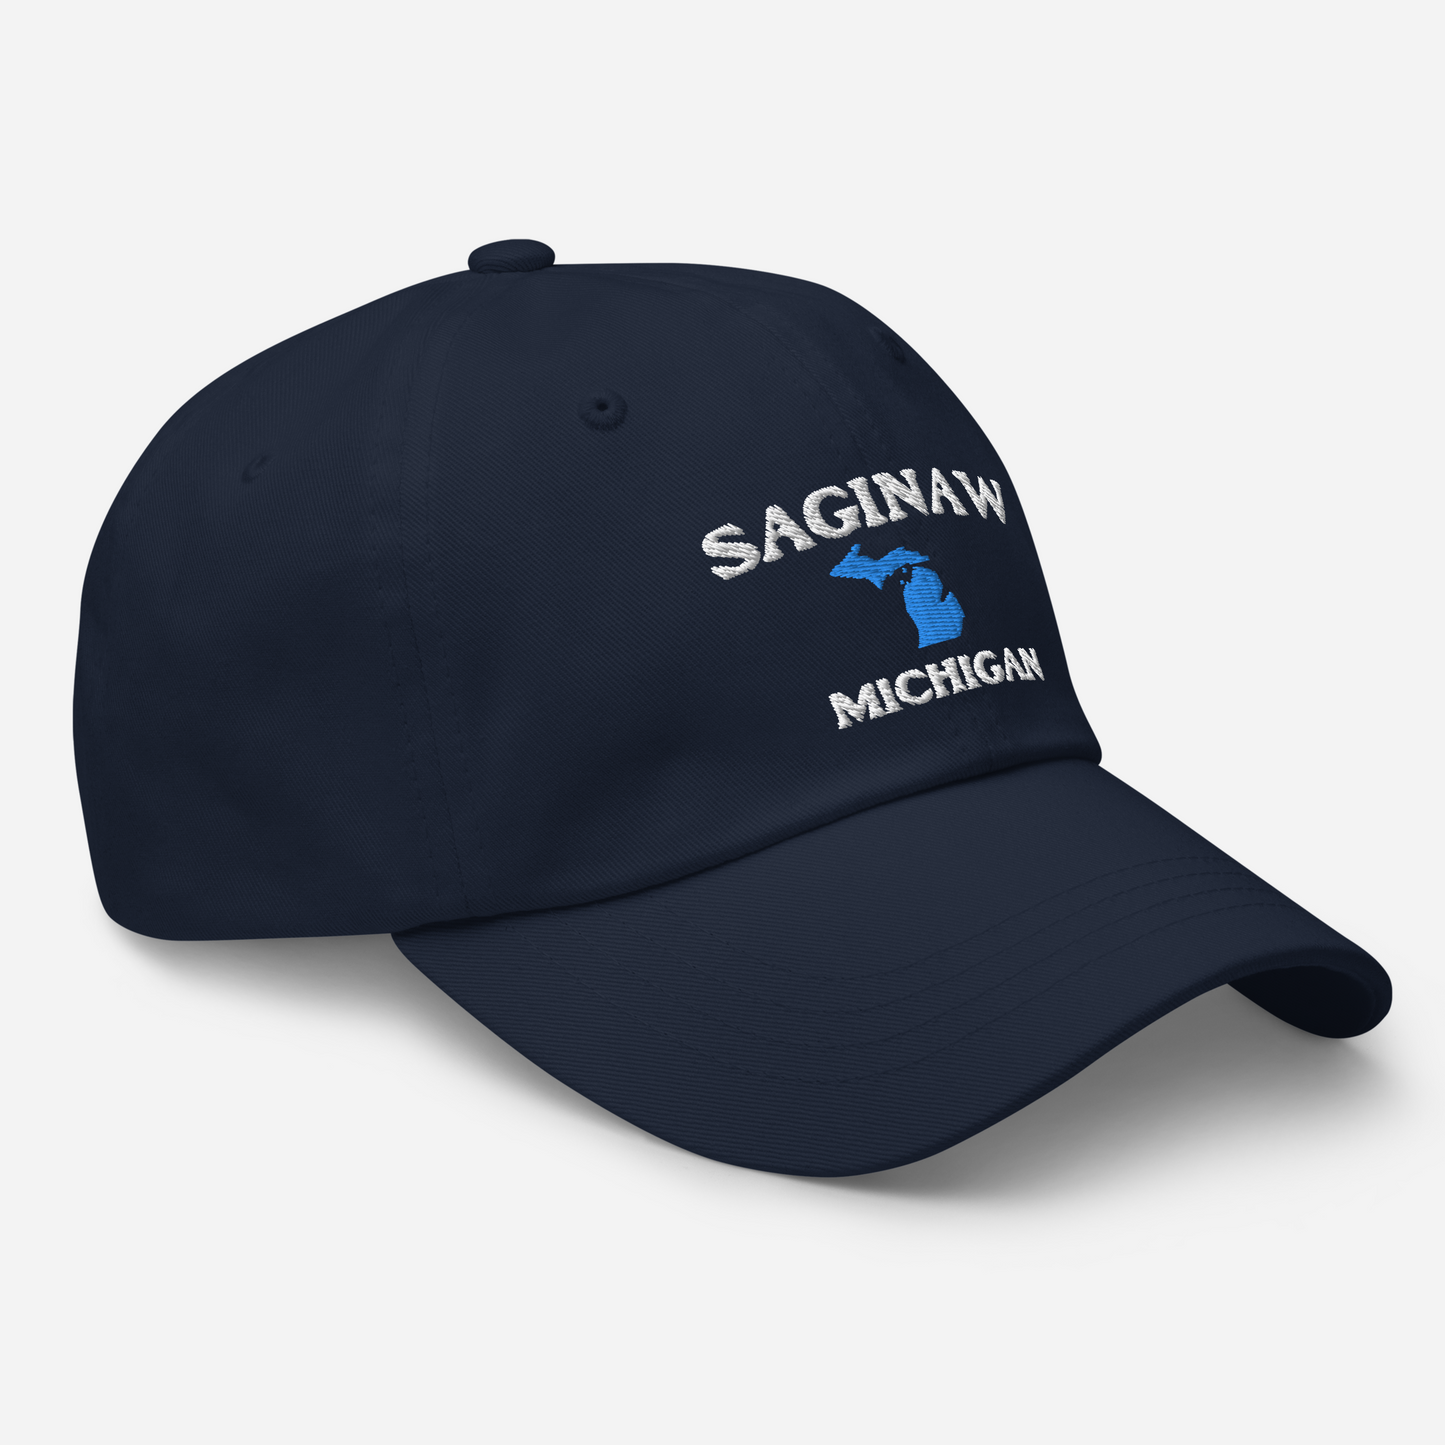 'Saginaw Michigan' Dad Hat (w/ Michigan Outline)